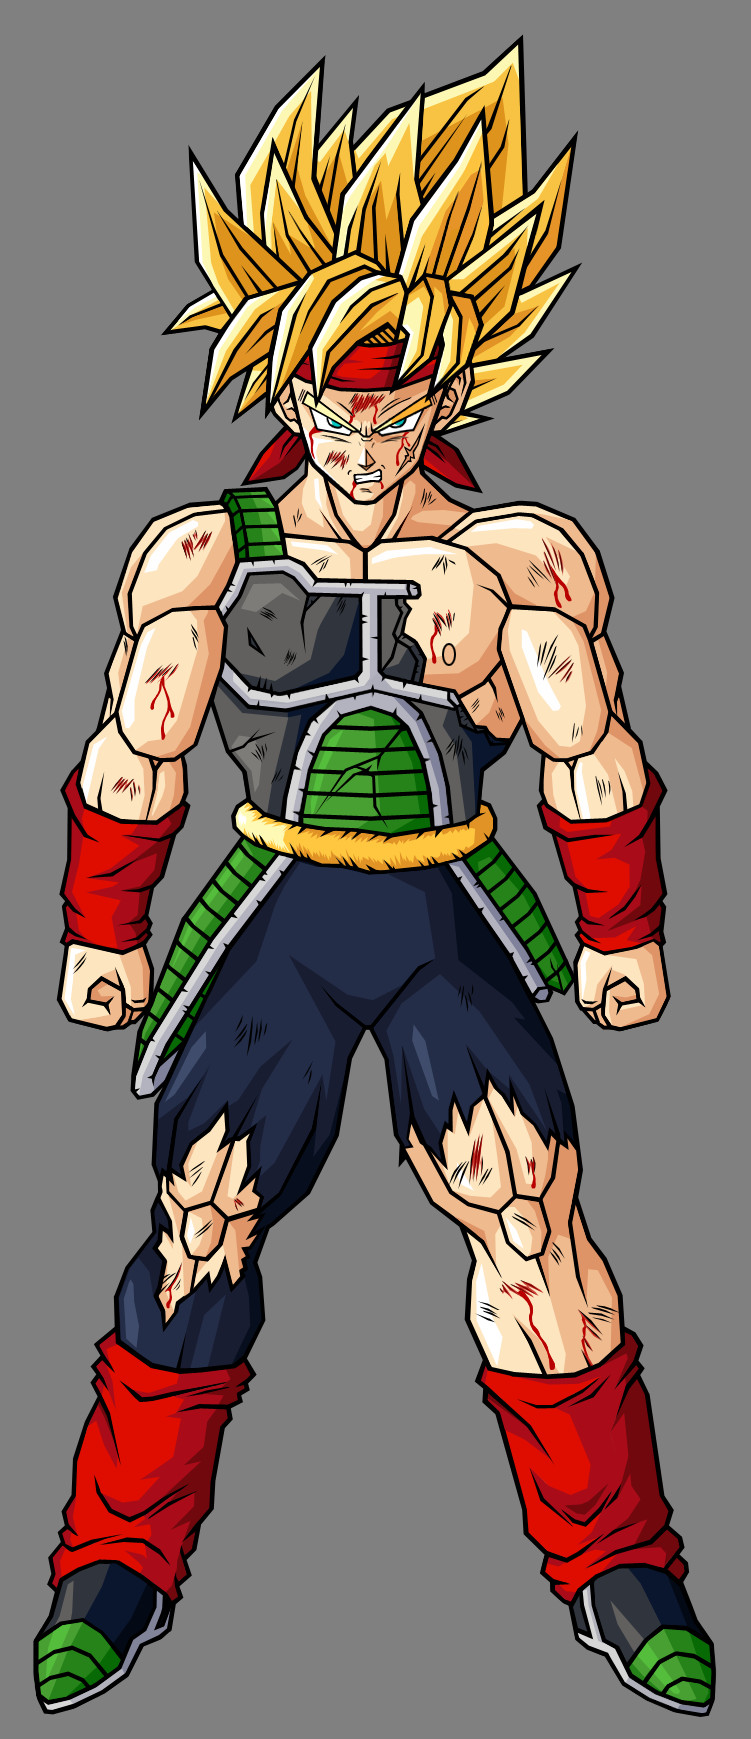 Return of Bardock: The Search for Goku | Dragonball Fanon Wiki | FANDOM